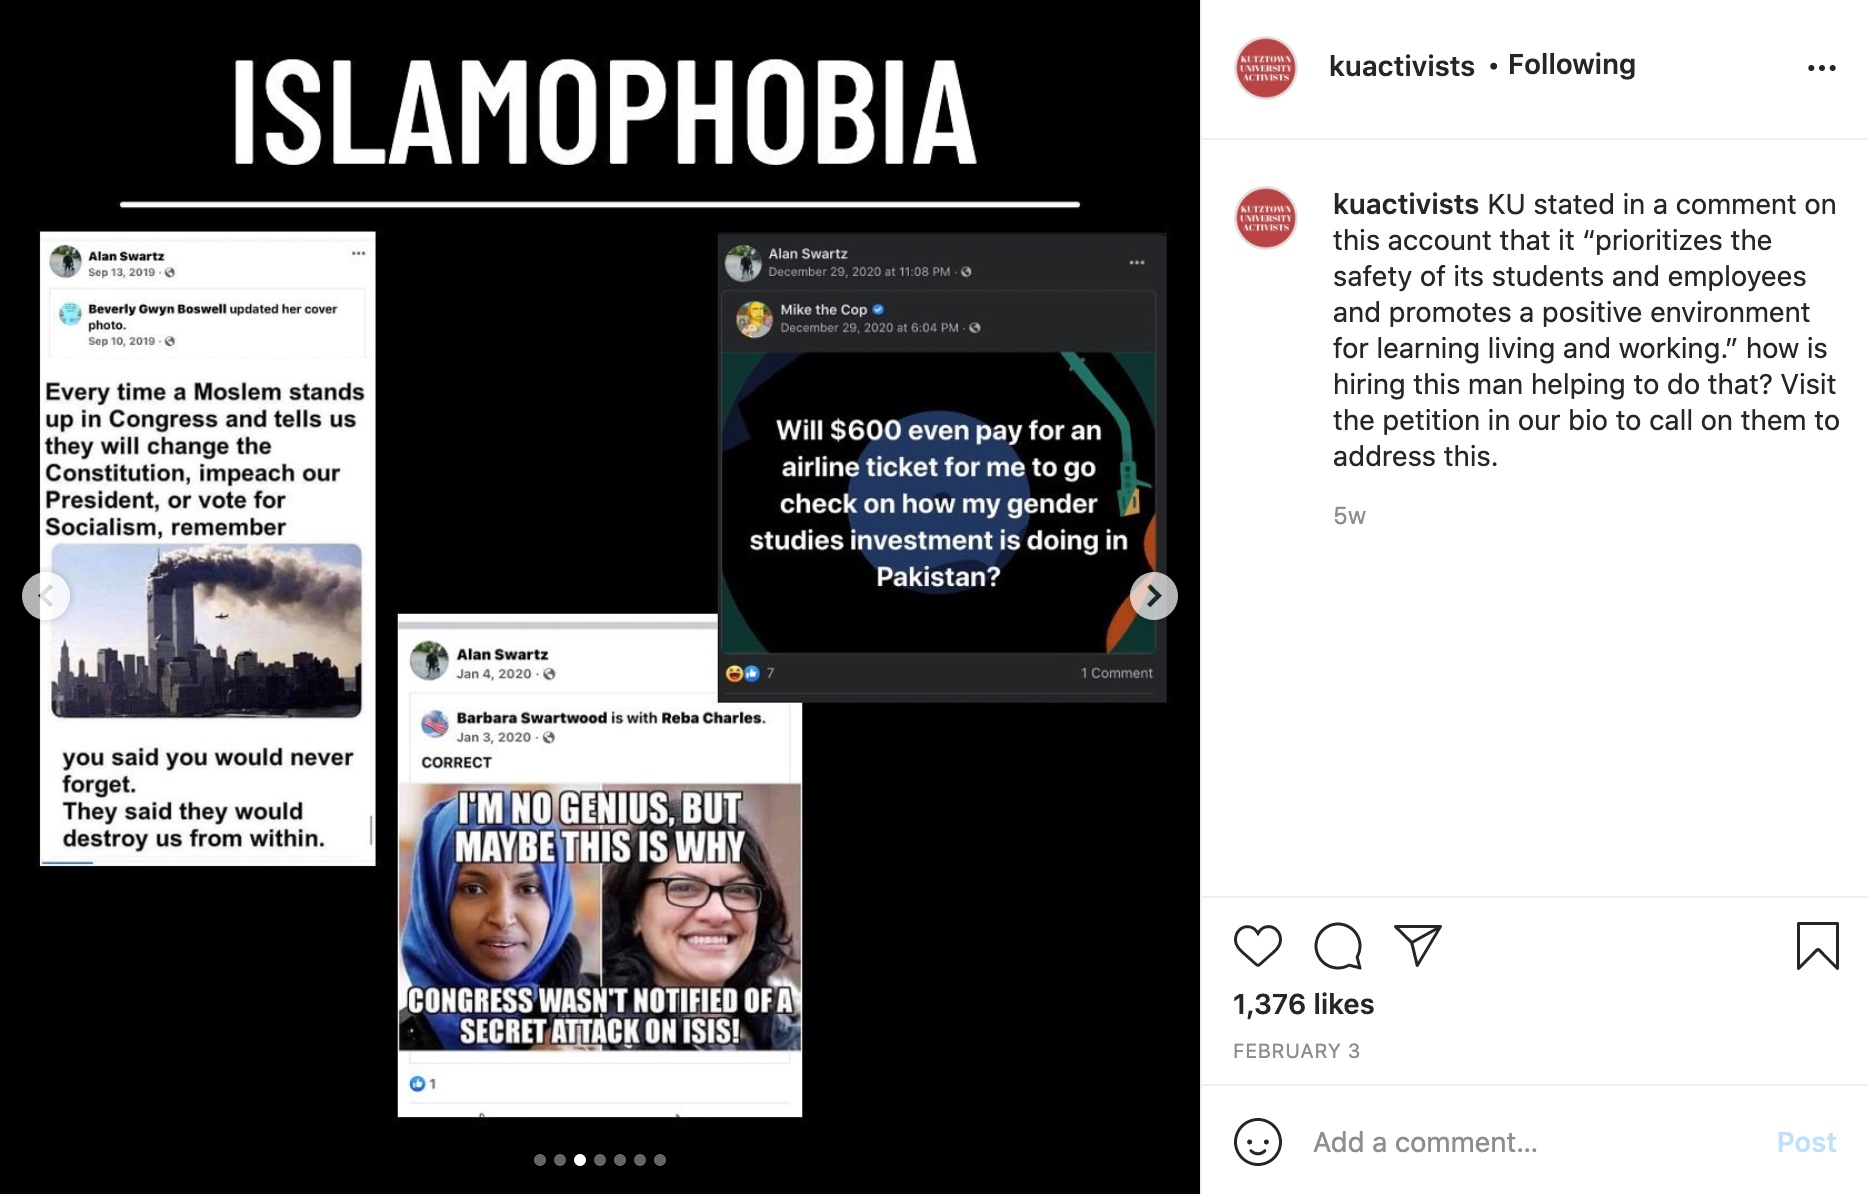 Screenshots of Islamophobic memes shared by Swartz